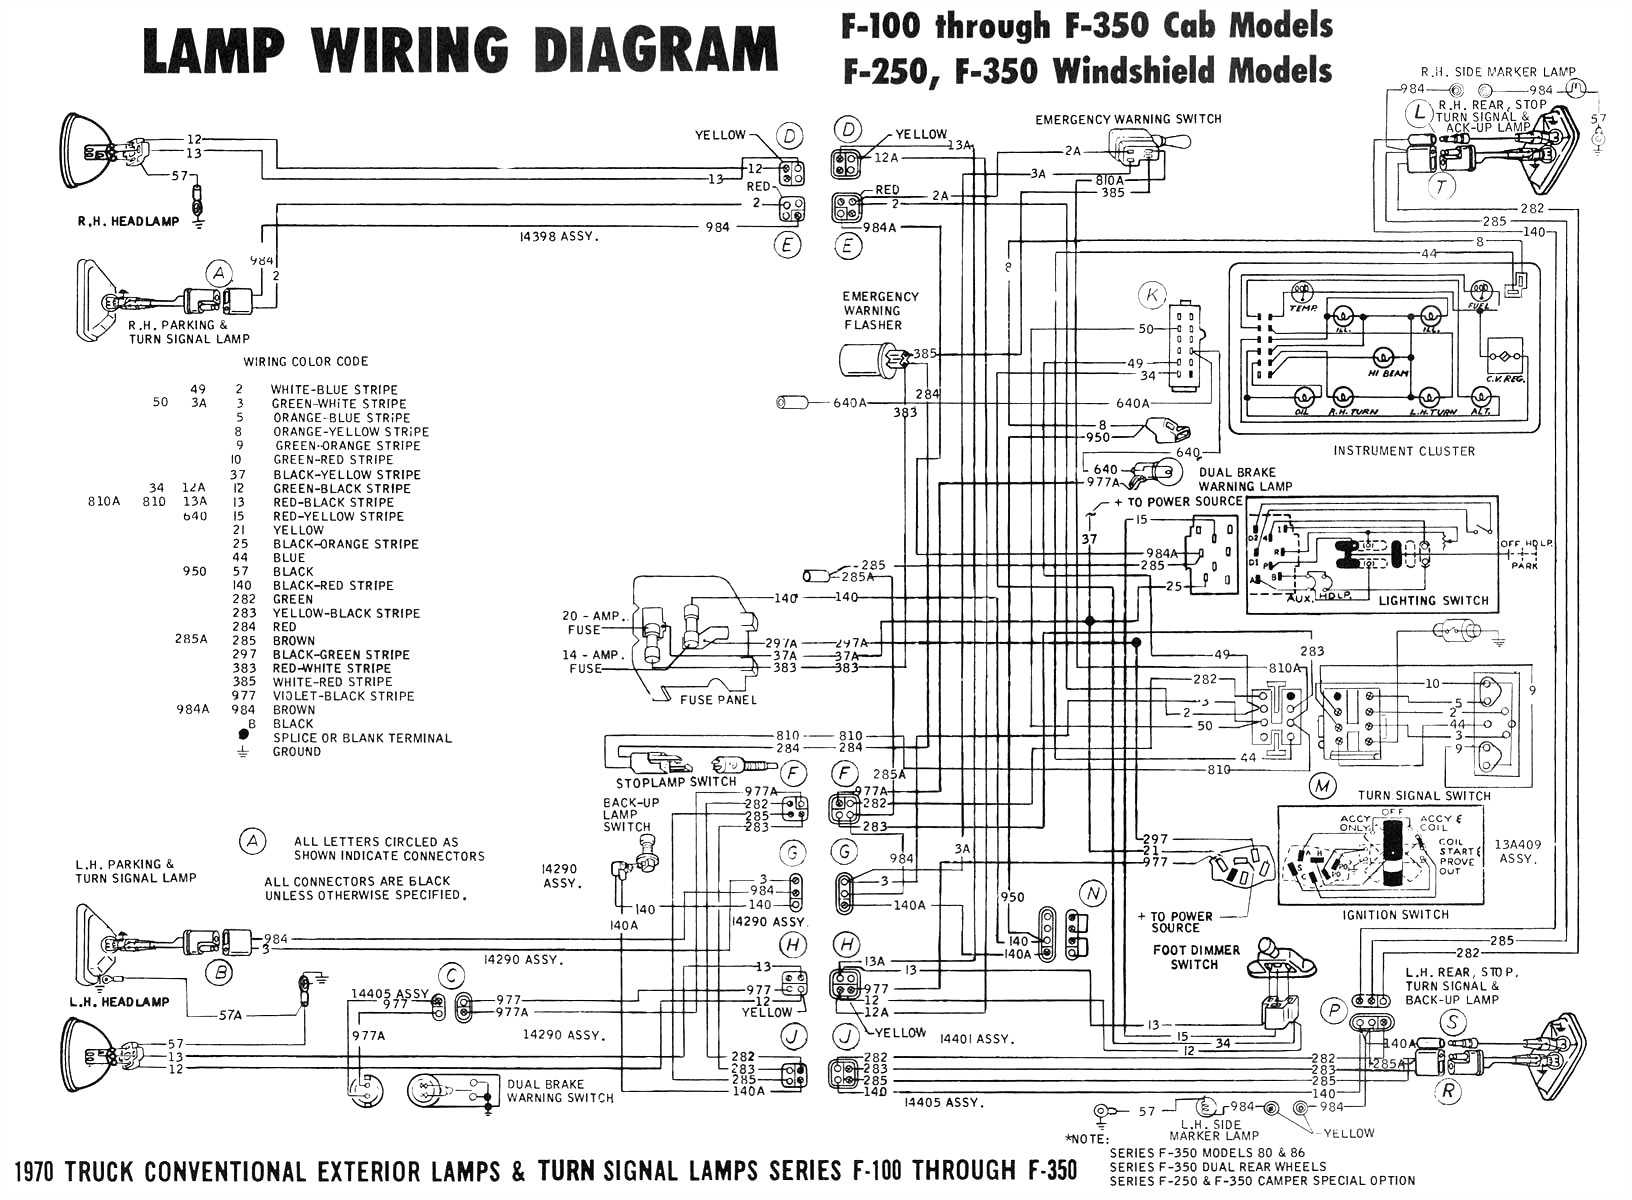 wiring diagrams for lighting circuits e2 80 93 junction box method wiring diagram amc marlin fastback